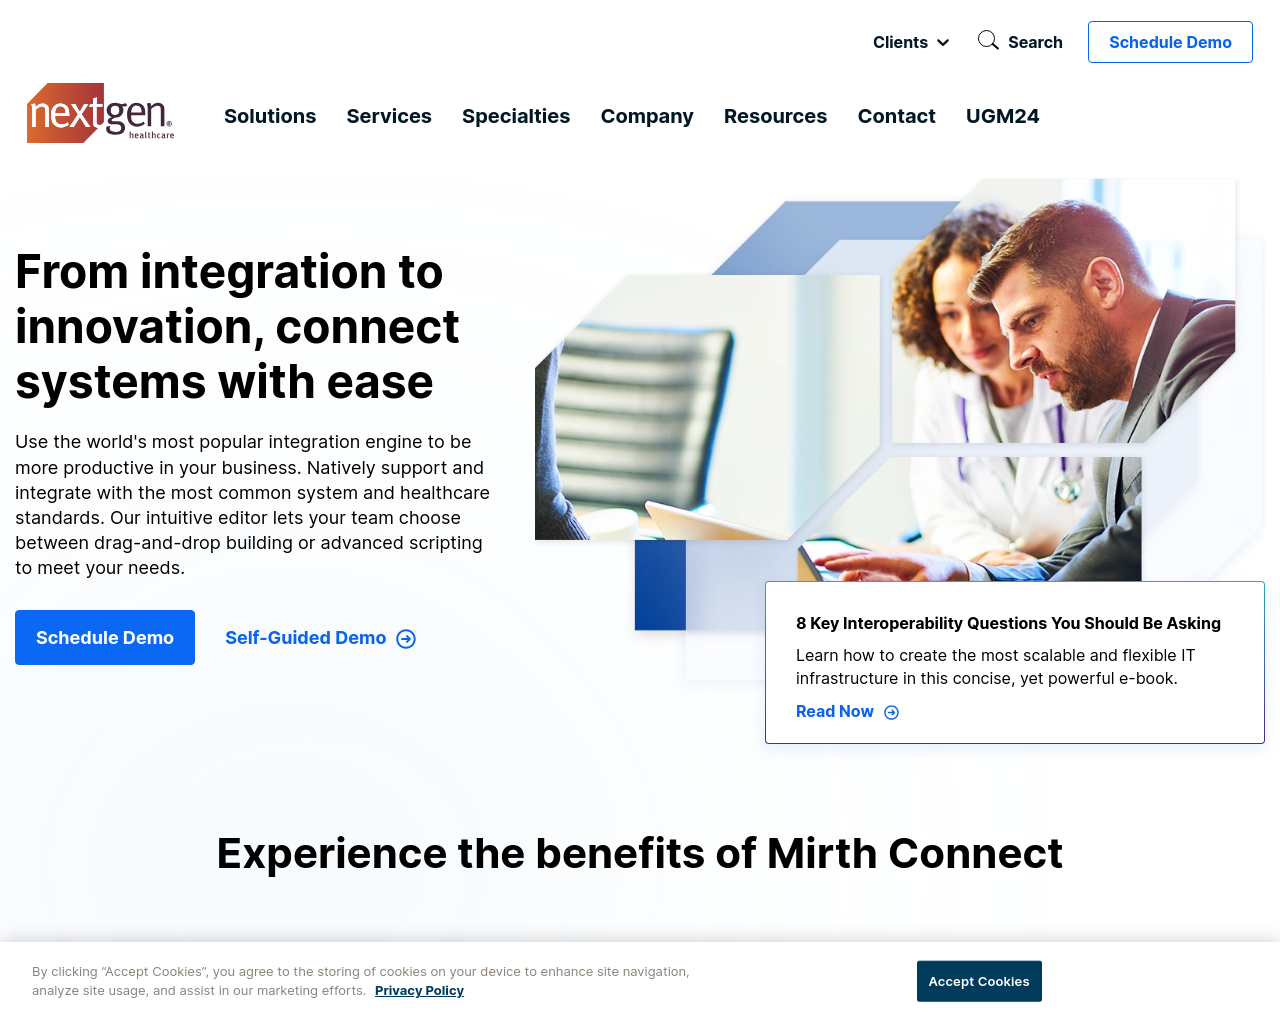 mirth.com